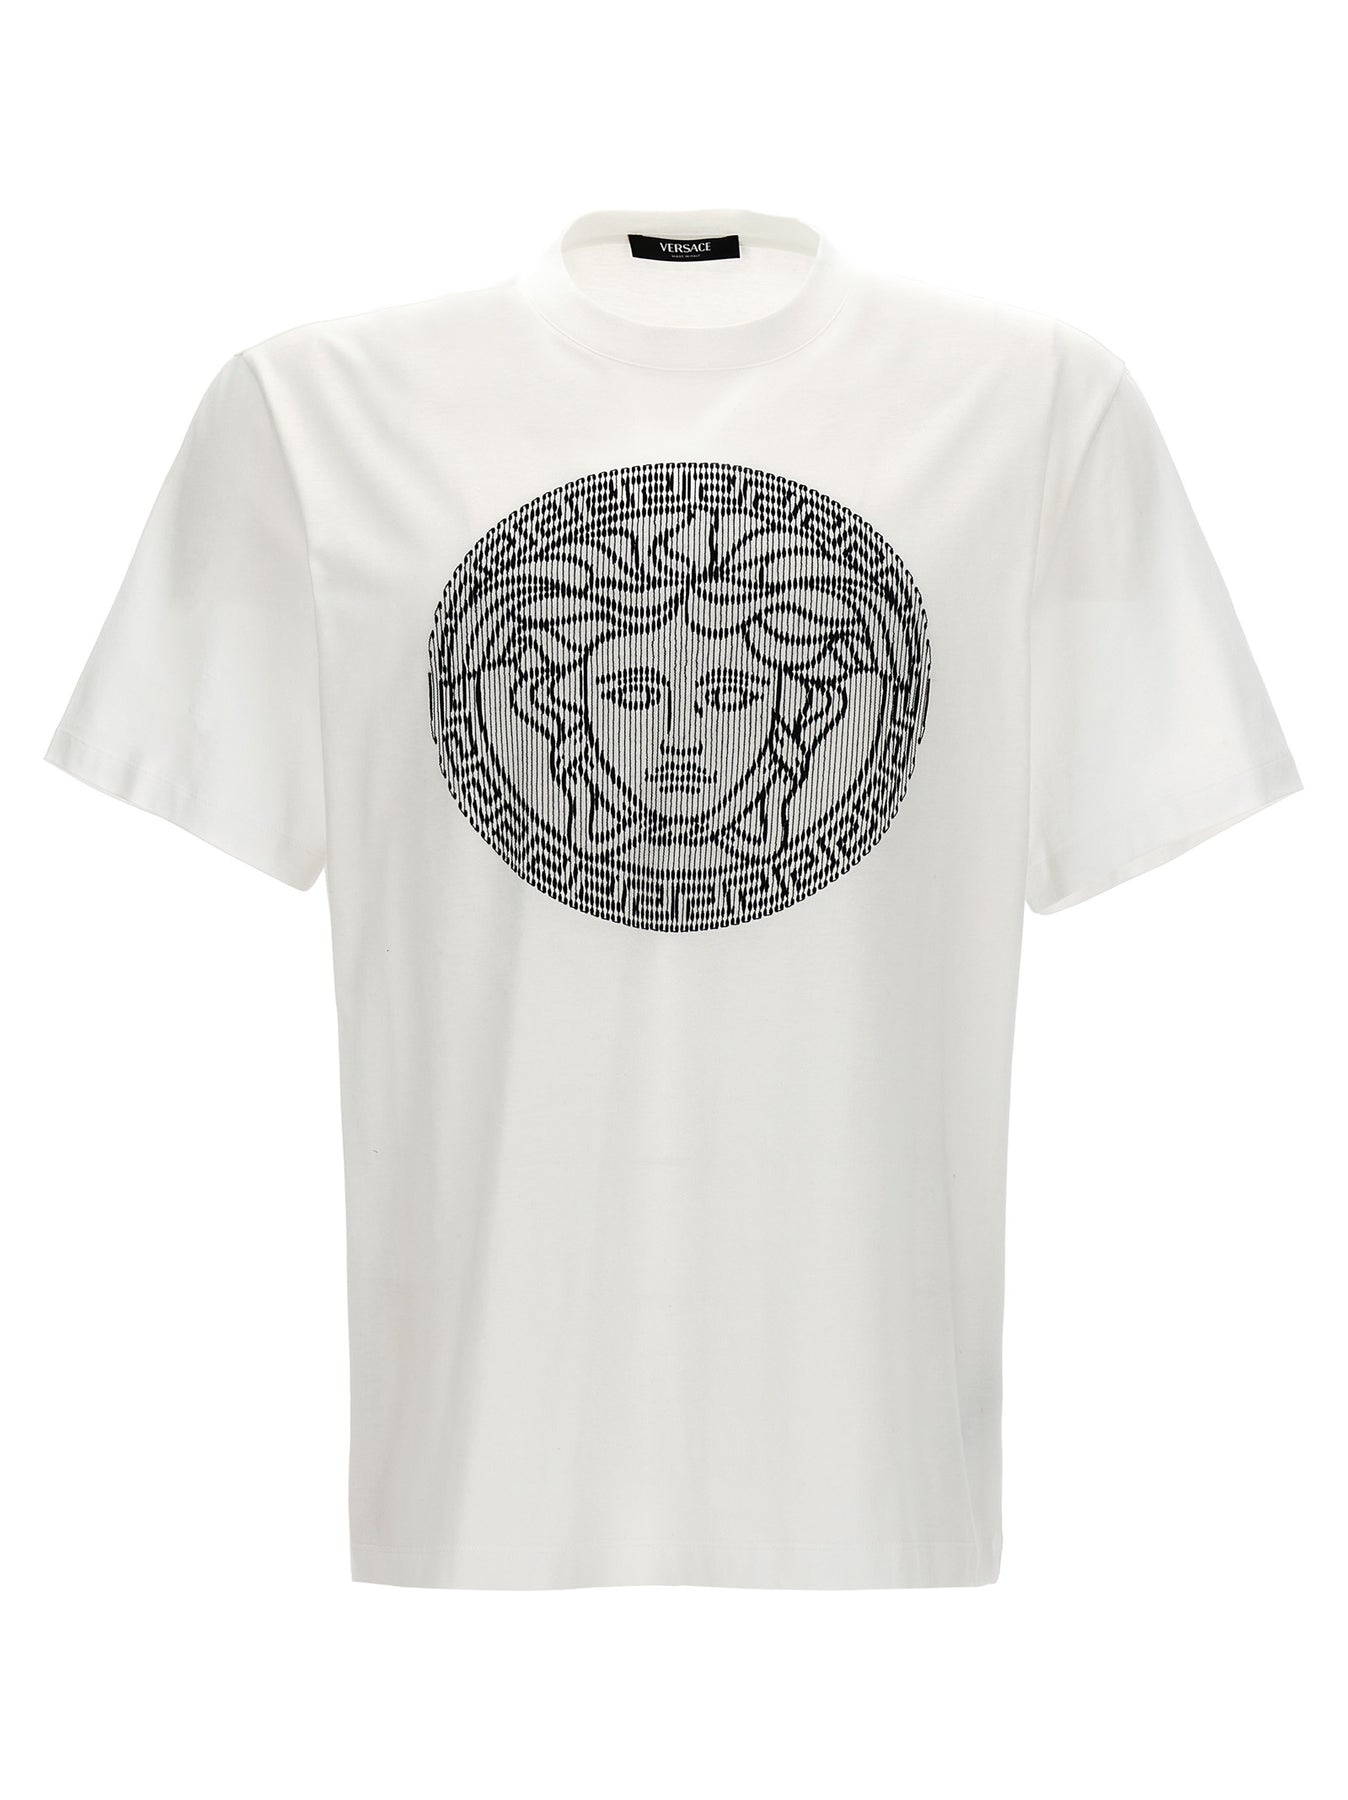 Logo Embroidery T-Shirt White/Black - 1